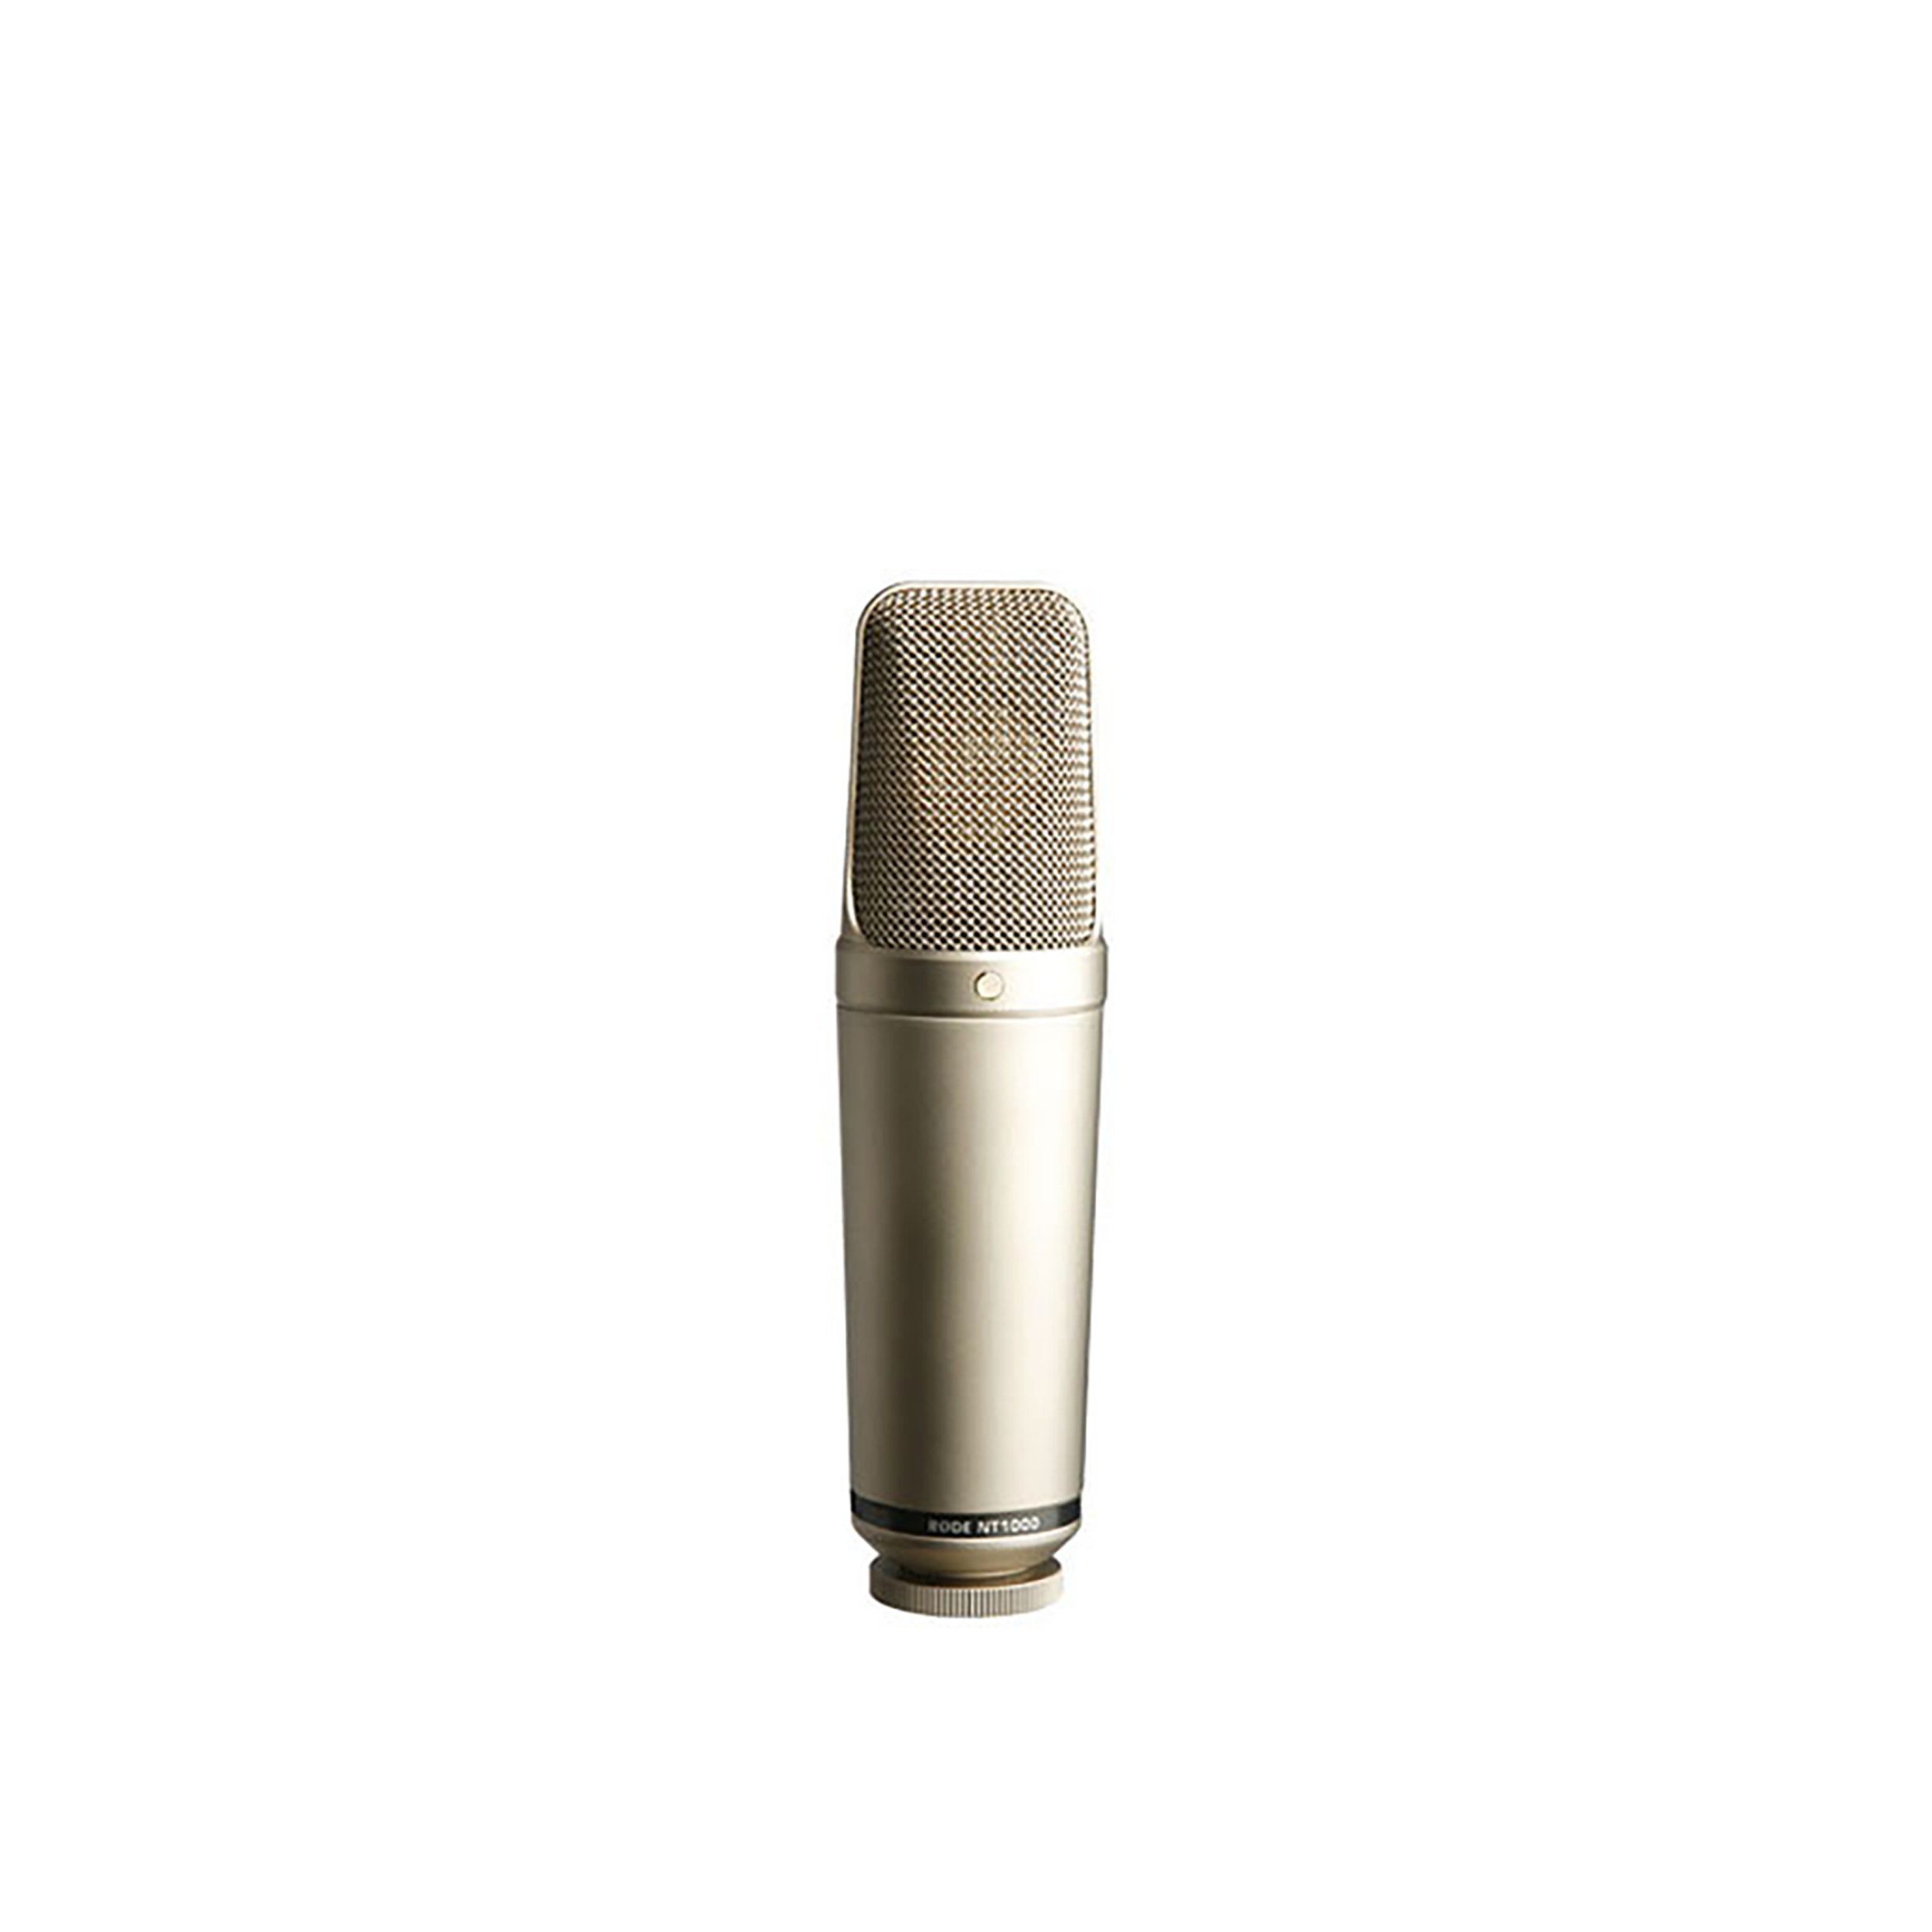 Rode NT1000 1" Studio Condenser Microphone